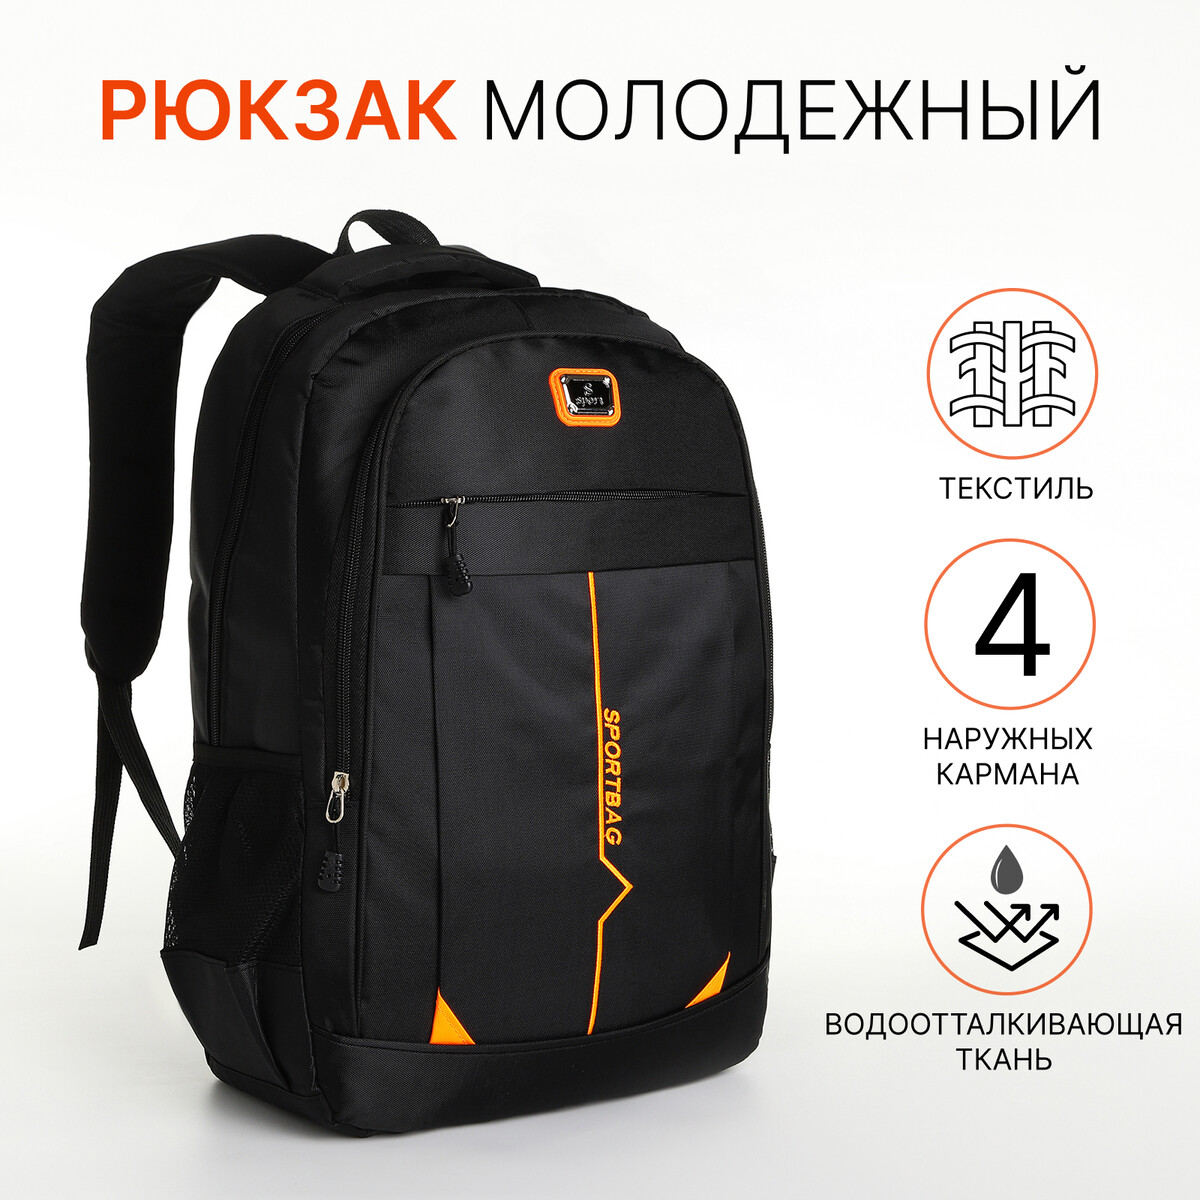 Рюкзак молодежный на молнии, 4 кармана, цвет черный/оранжевый рюкзак молодежный из текстиля на молнии 4 кармана оранжевый